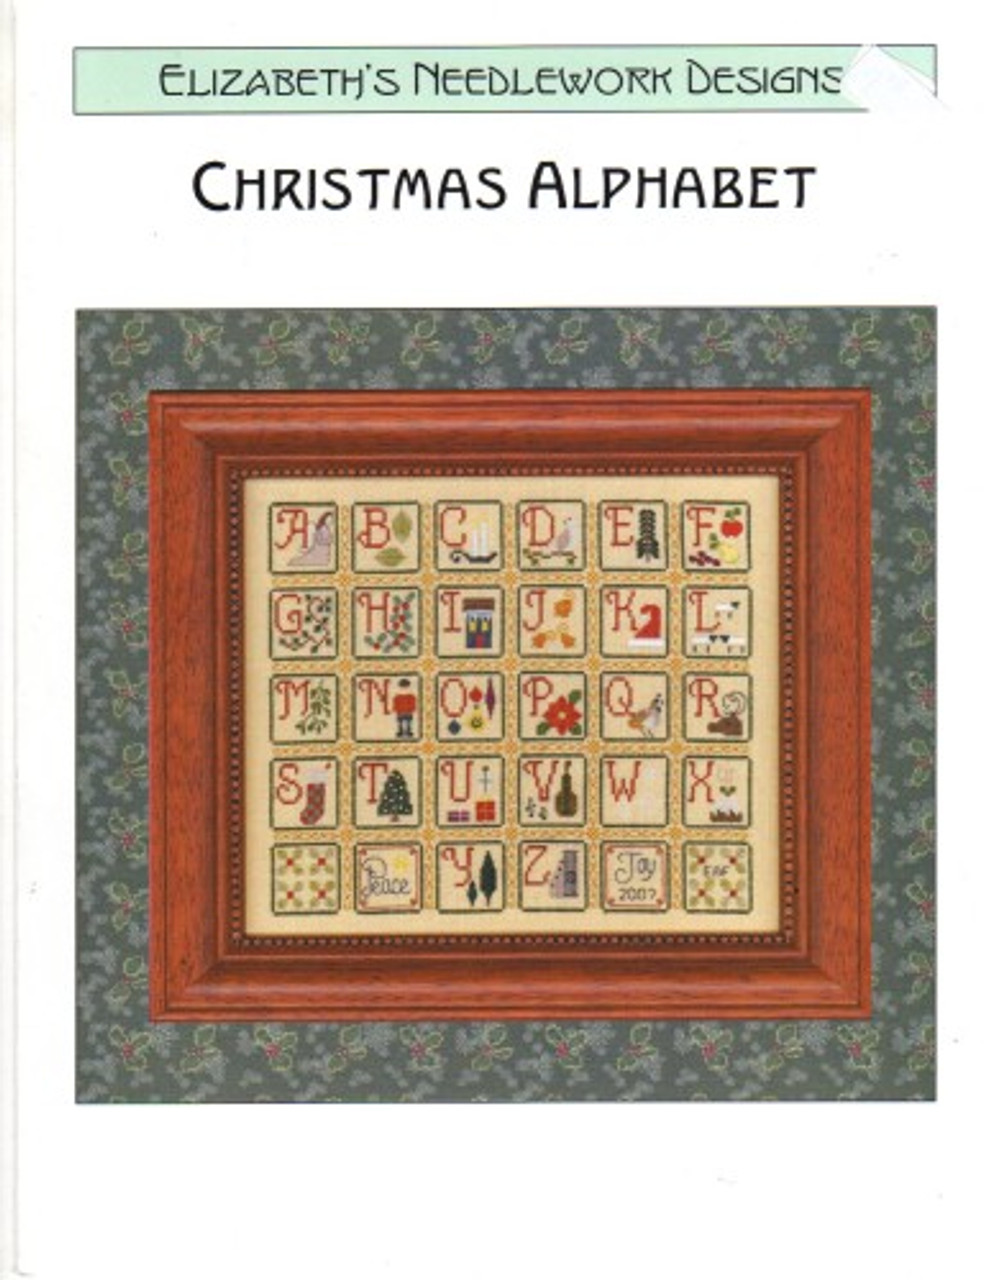 Christmas Alphabet by Elizabeth's Needlework Designs 